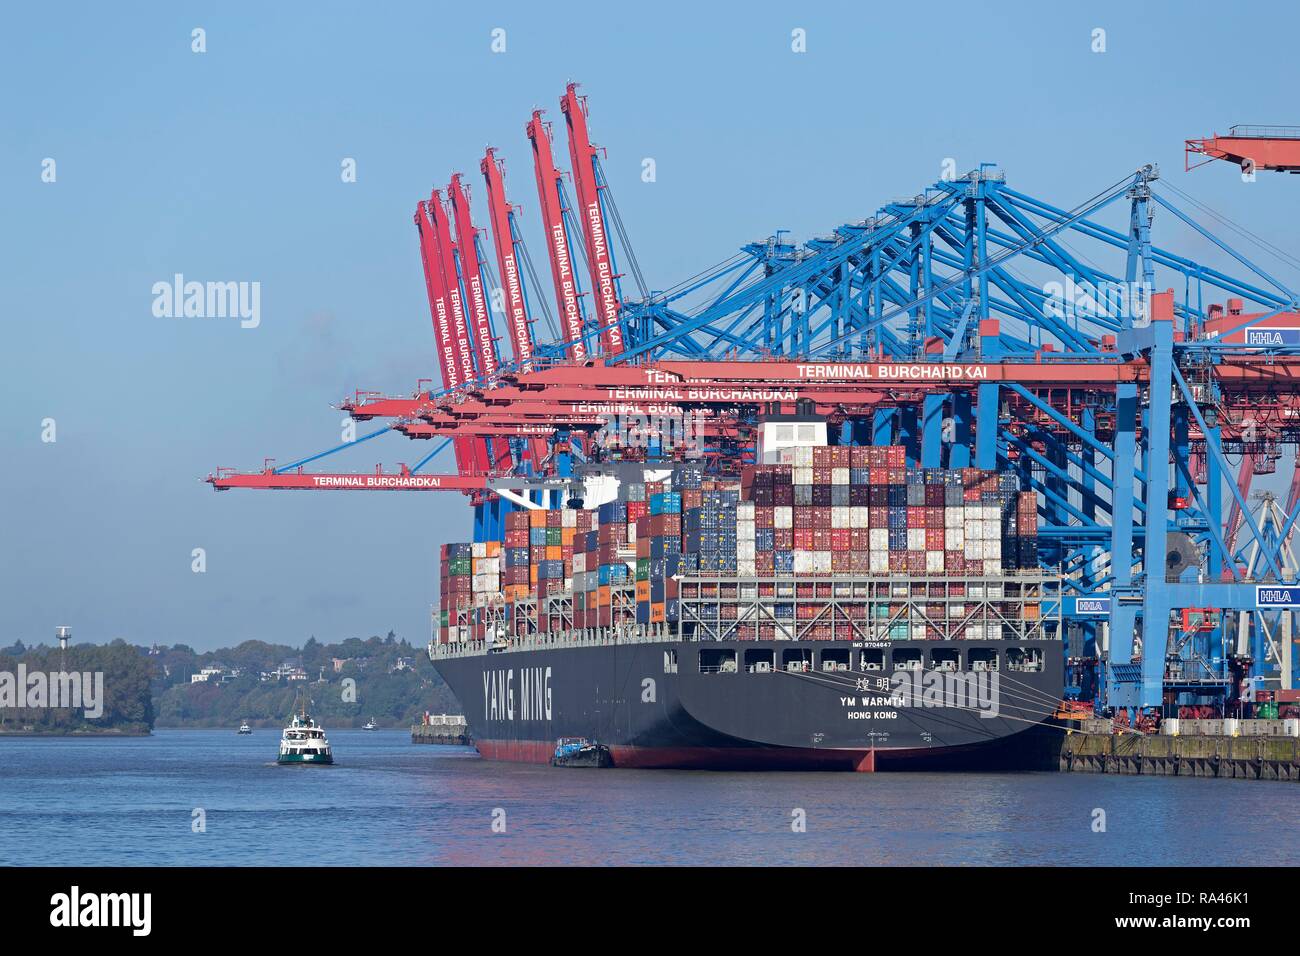 Loaded cargo ship in port, container terminal Burchardkai, Waltershof, Hamburg, Germany Stock Photo